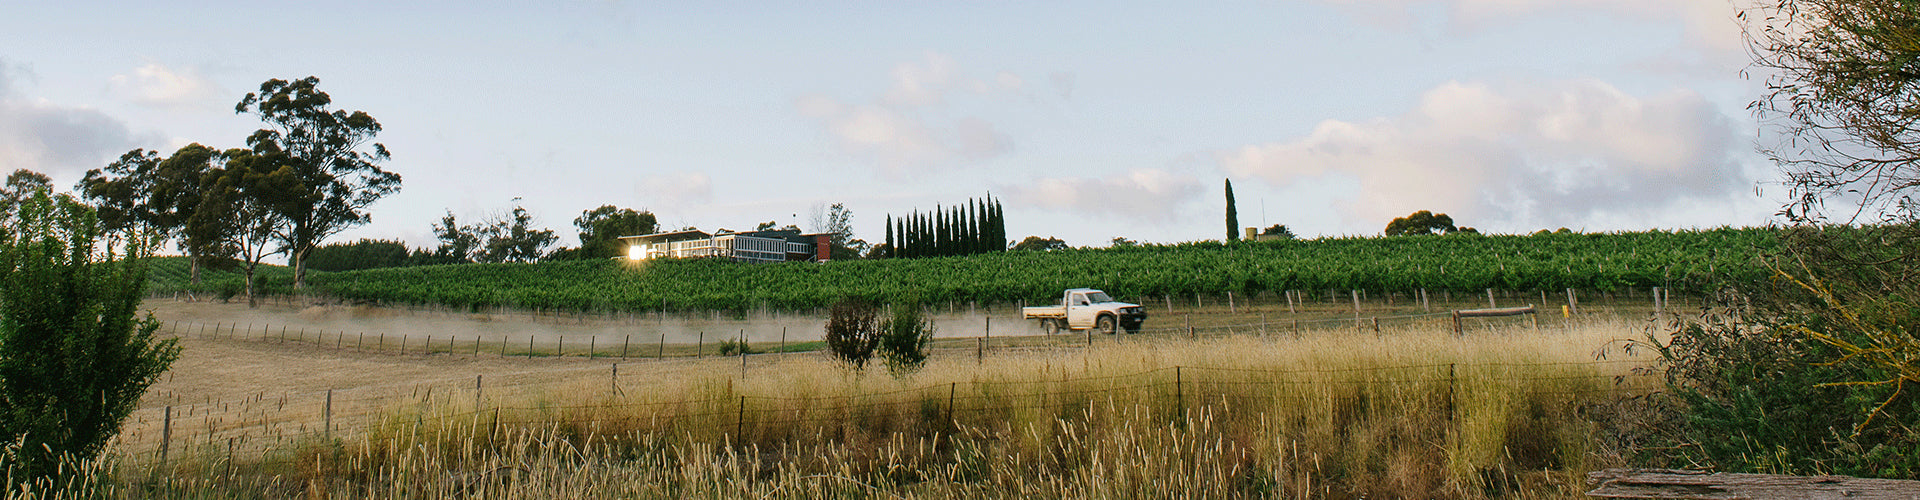 The Lane Vineyard Adelaide Hills